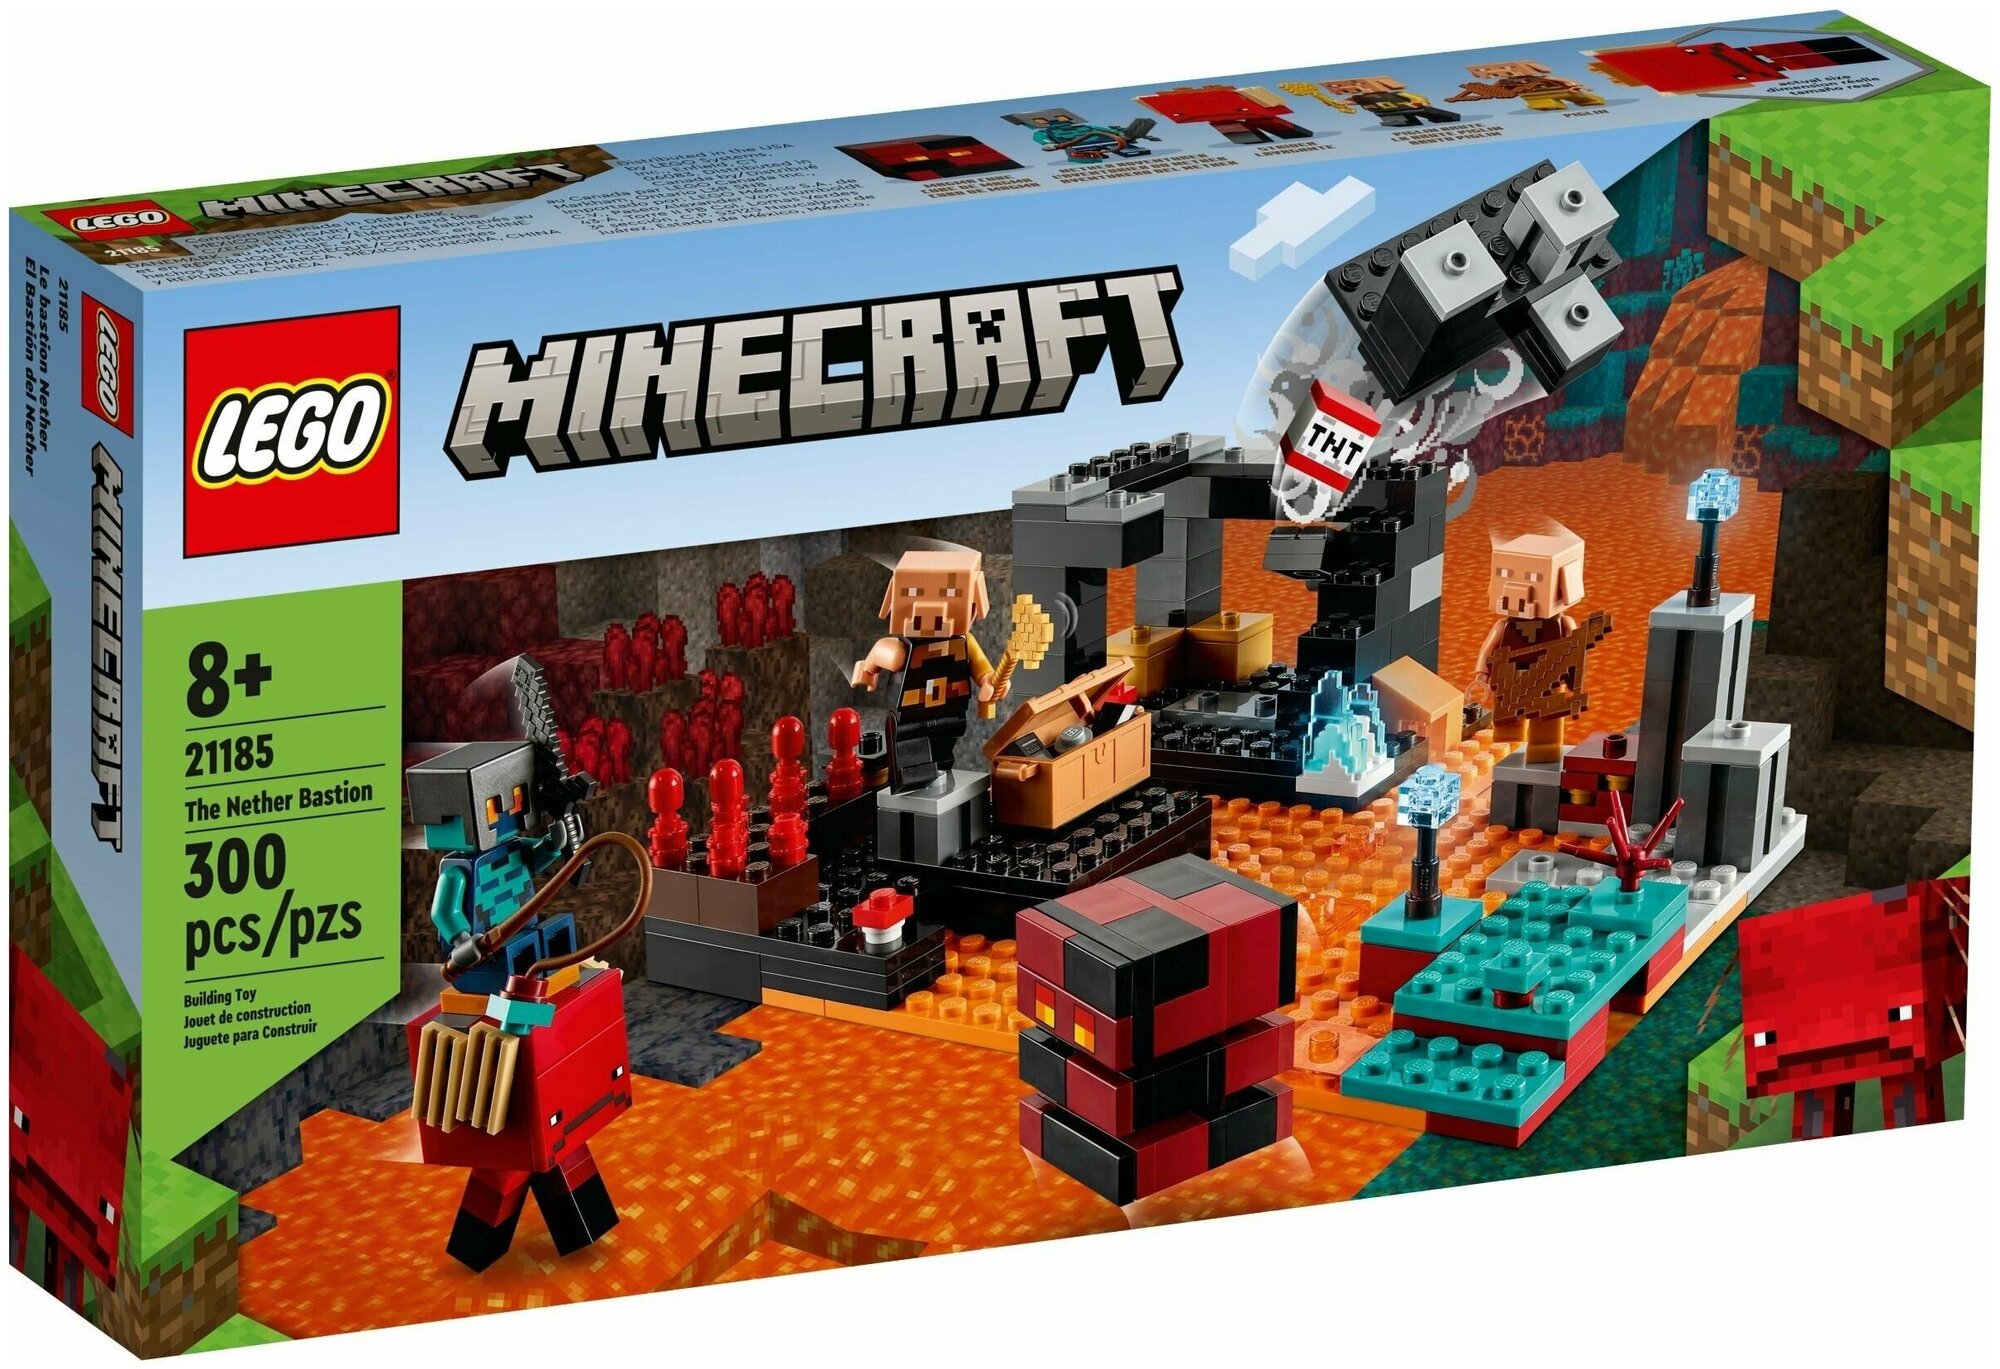 Конструктор LEGO Minecraft "Нижний бастион" 21185 - фото №1